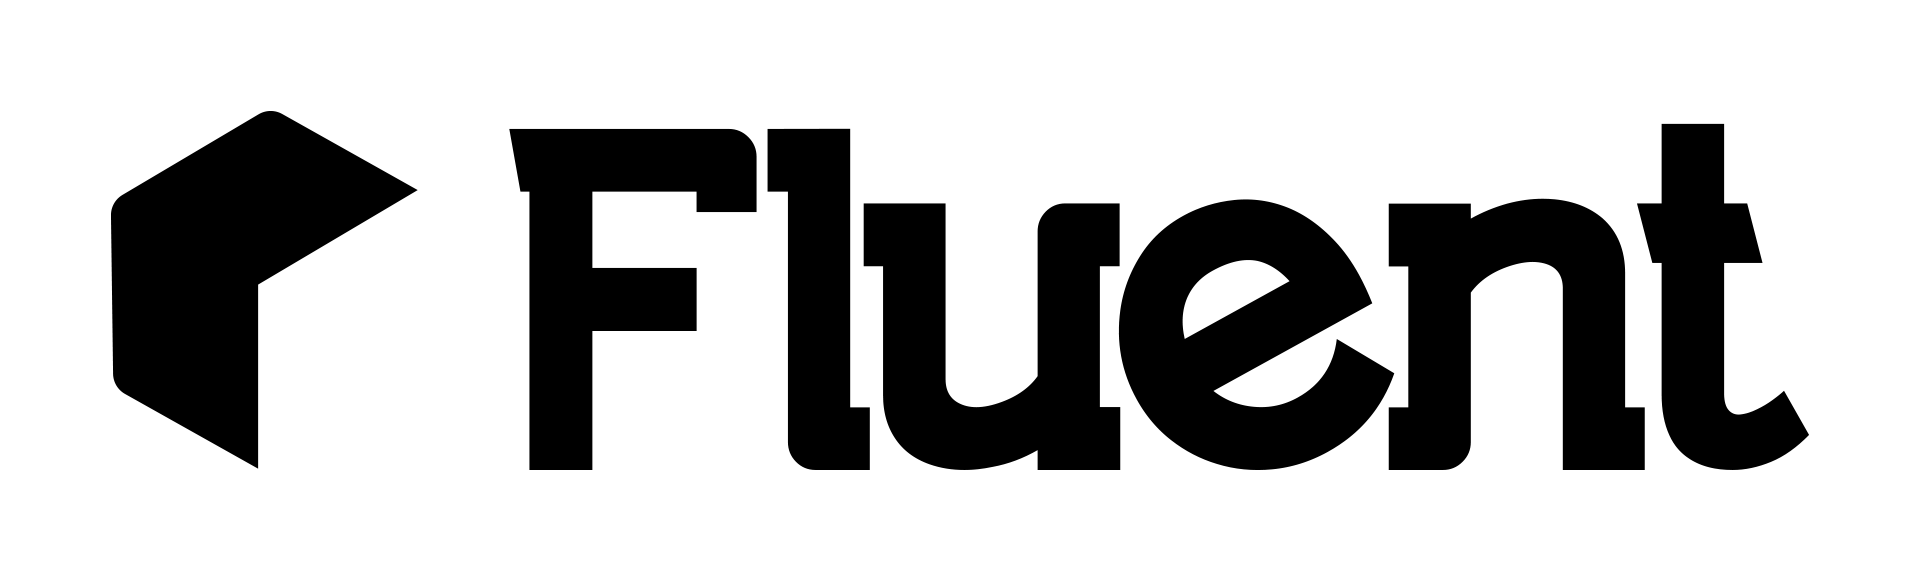 Fluent Solar logo